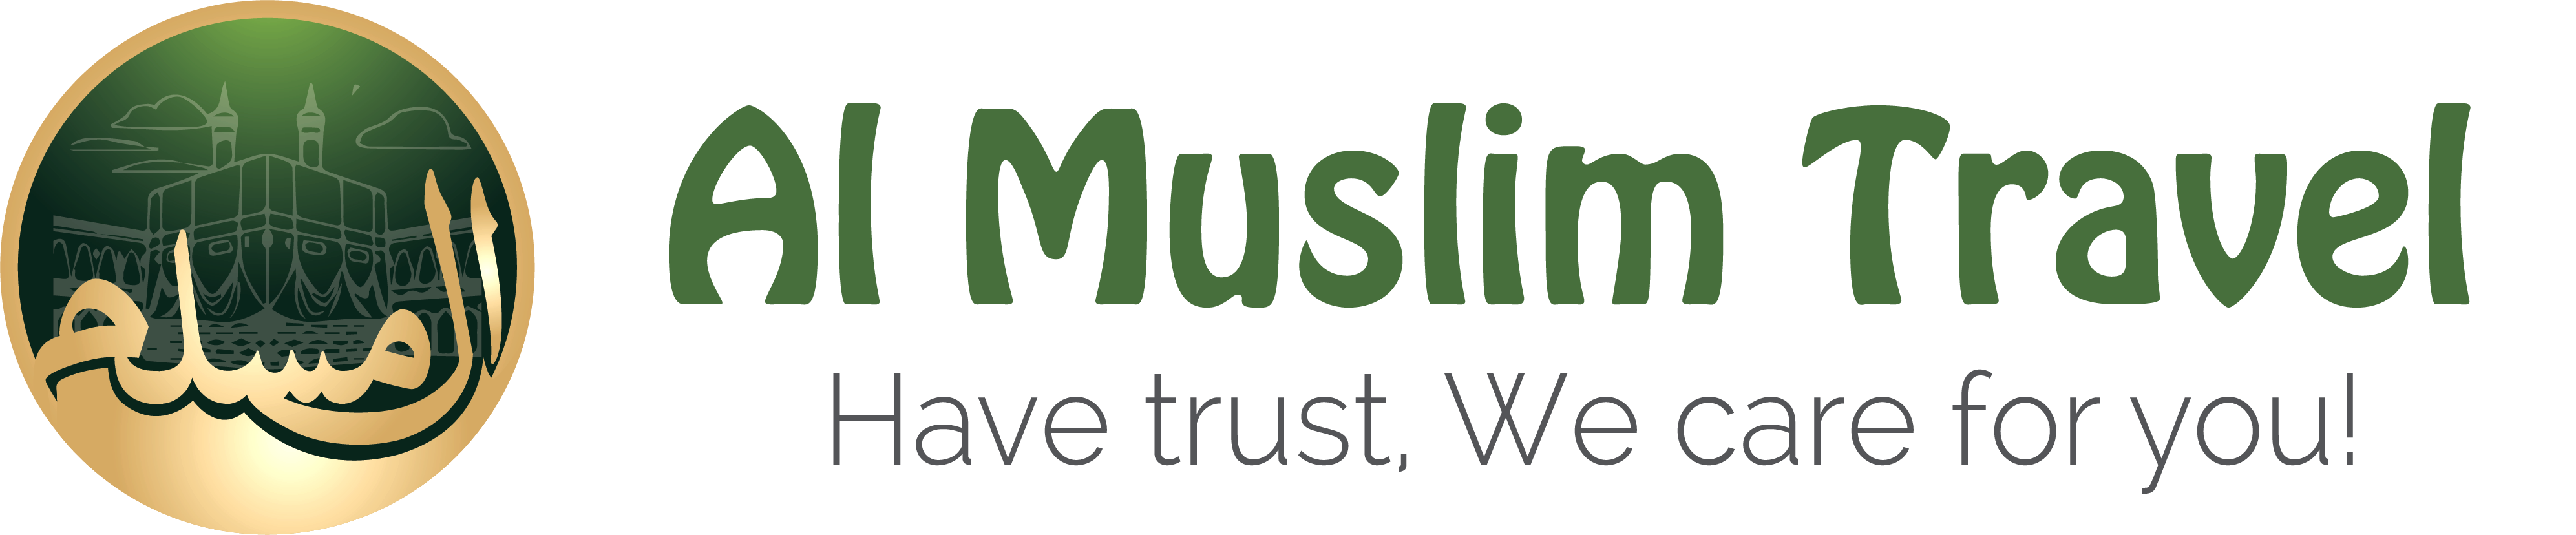 Al-Muslim-Travel-Logos